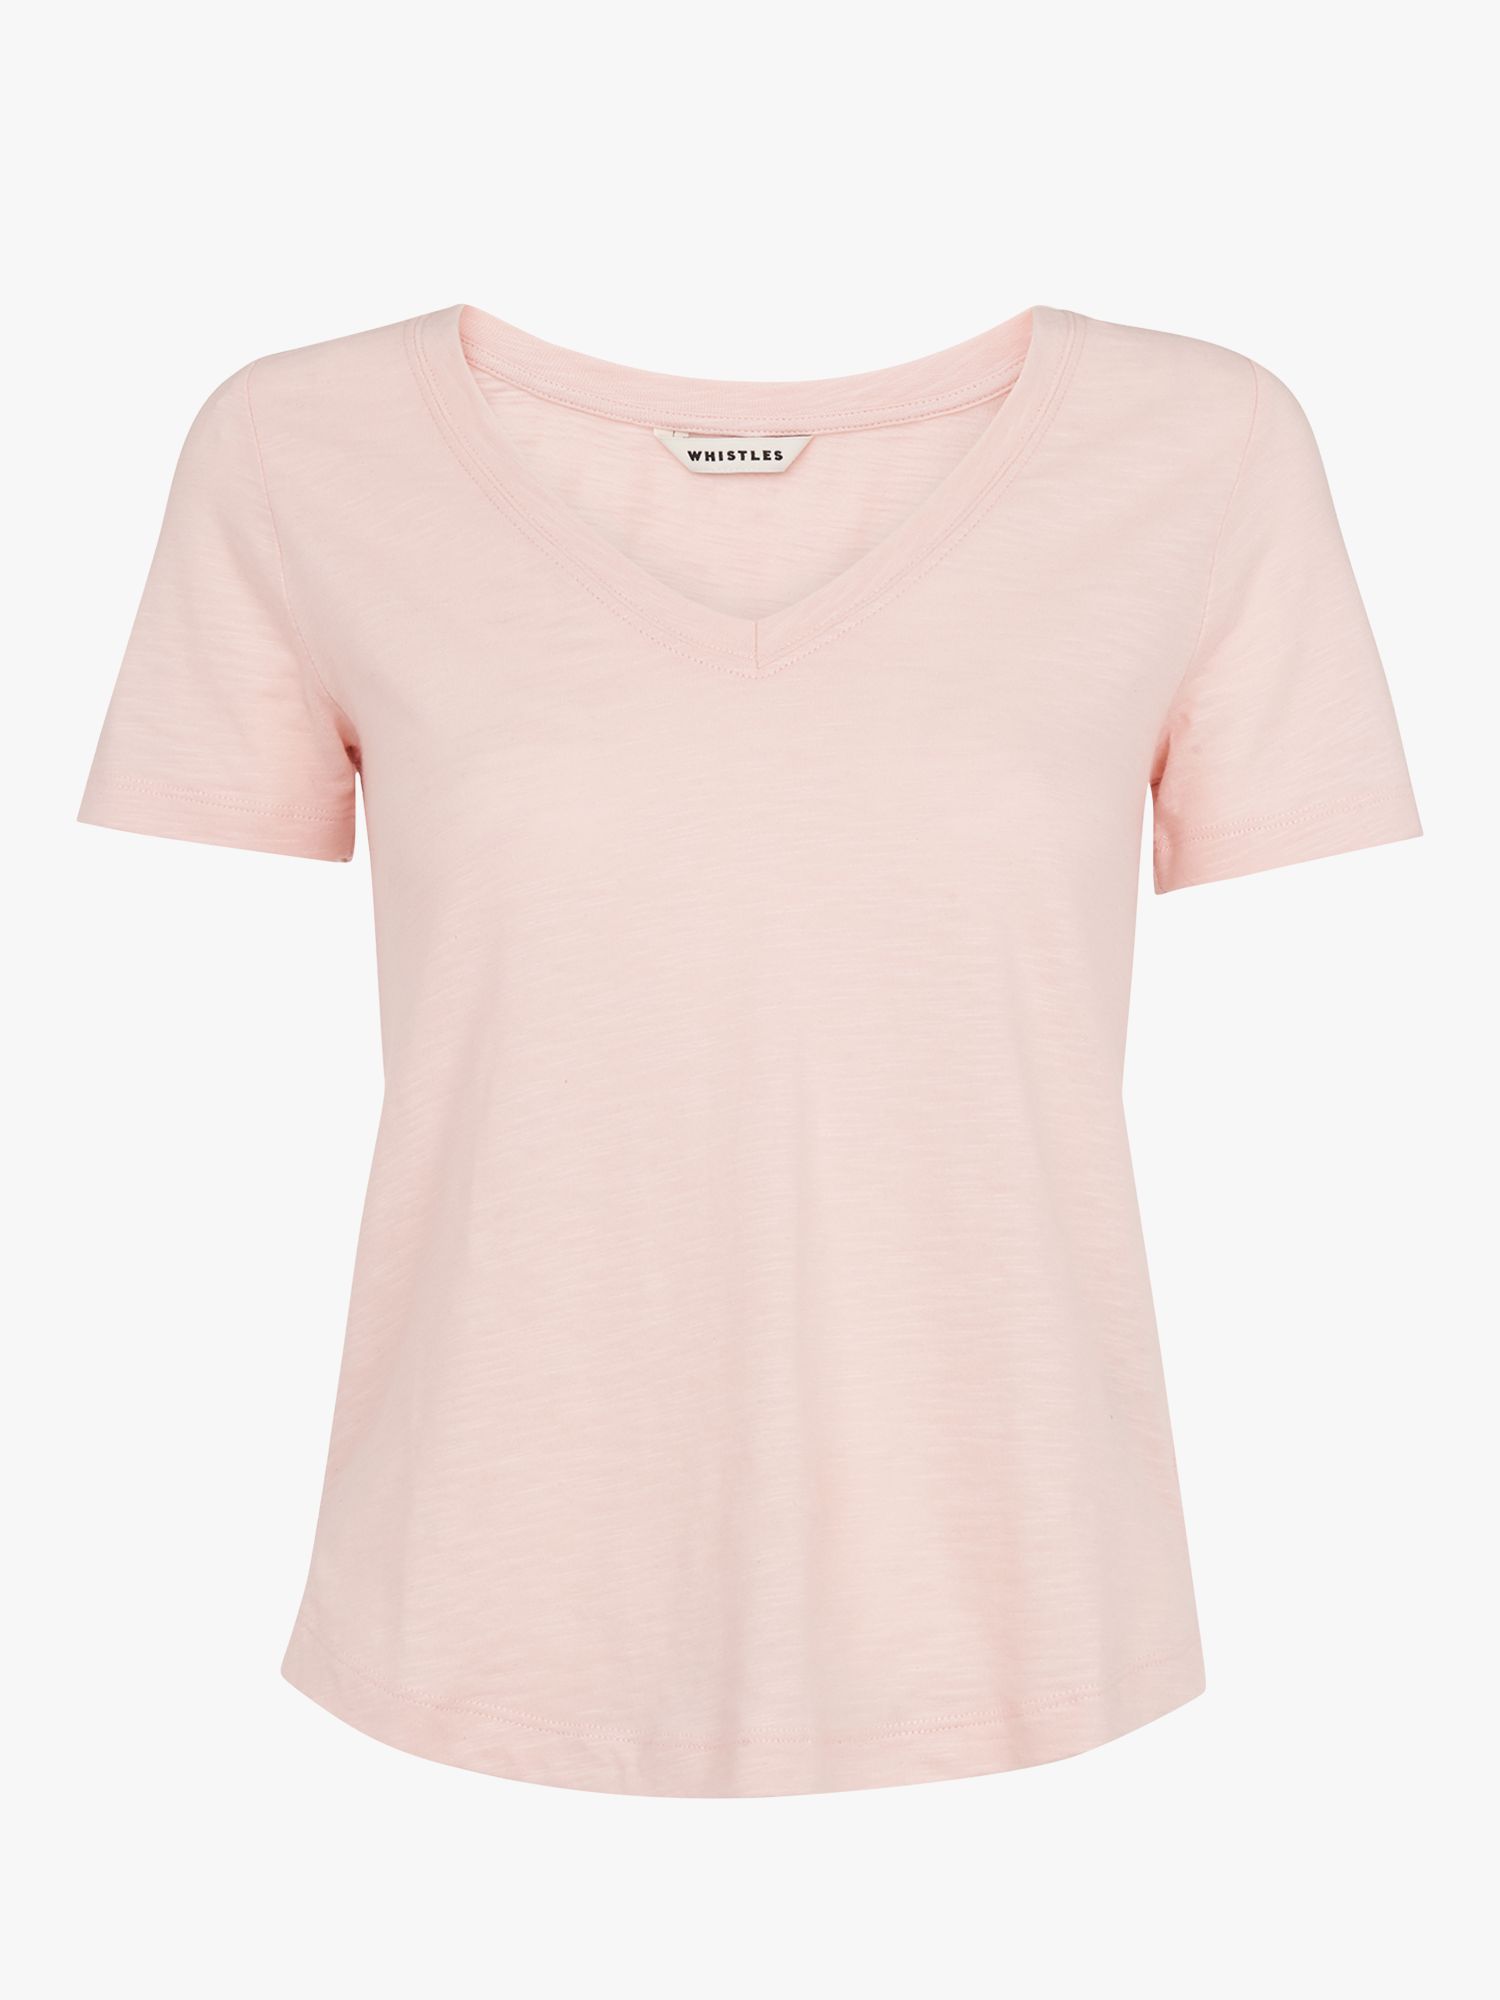 Whistles Sophie V-Neck Cotton T-Shirt, Pale Pink at John Lewis & Partners